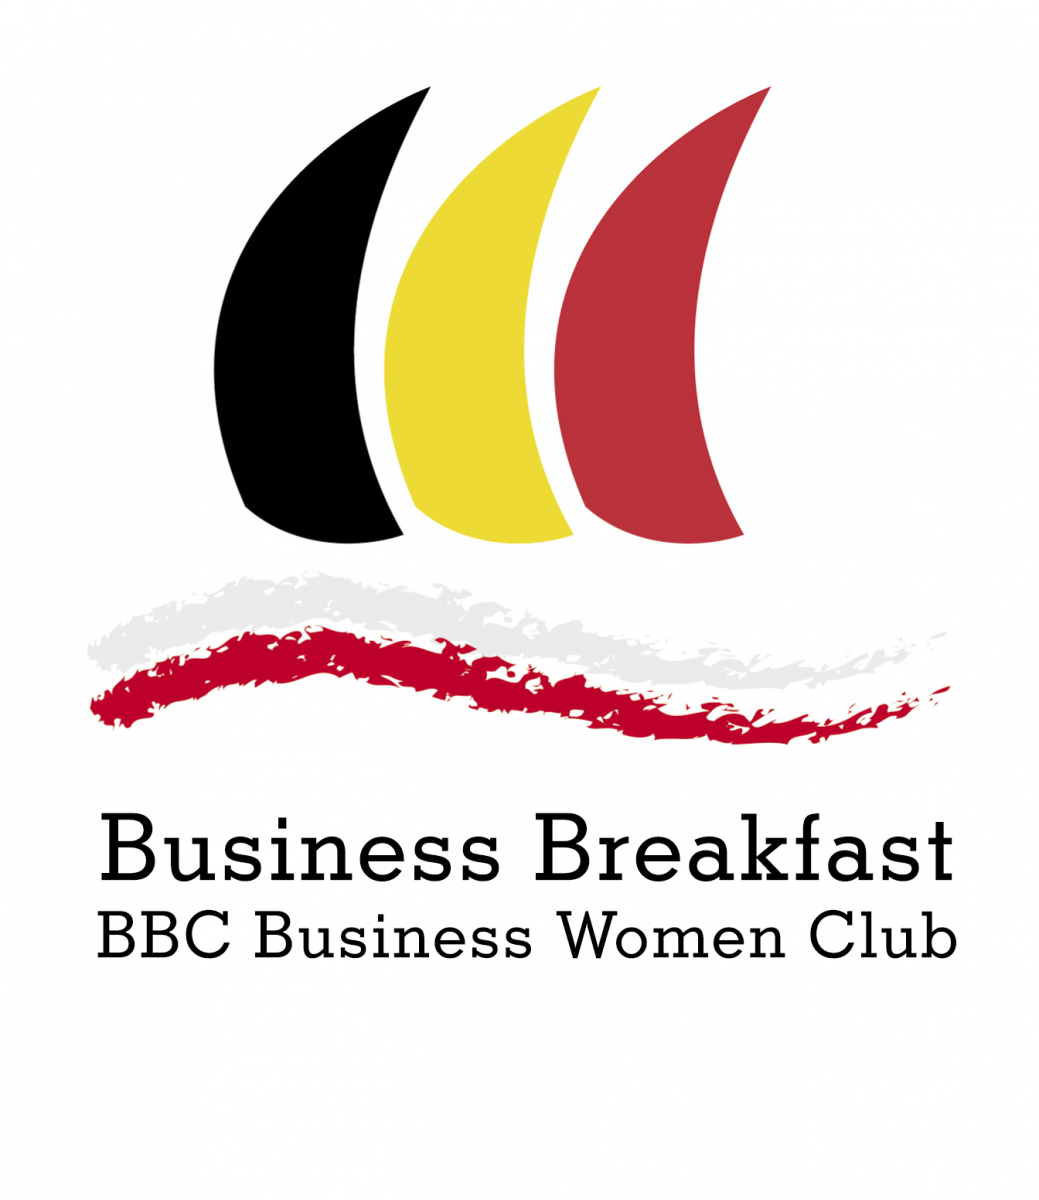 BELGIAN DAYS 2019: Business Breakfast BBC Business Women Club